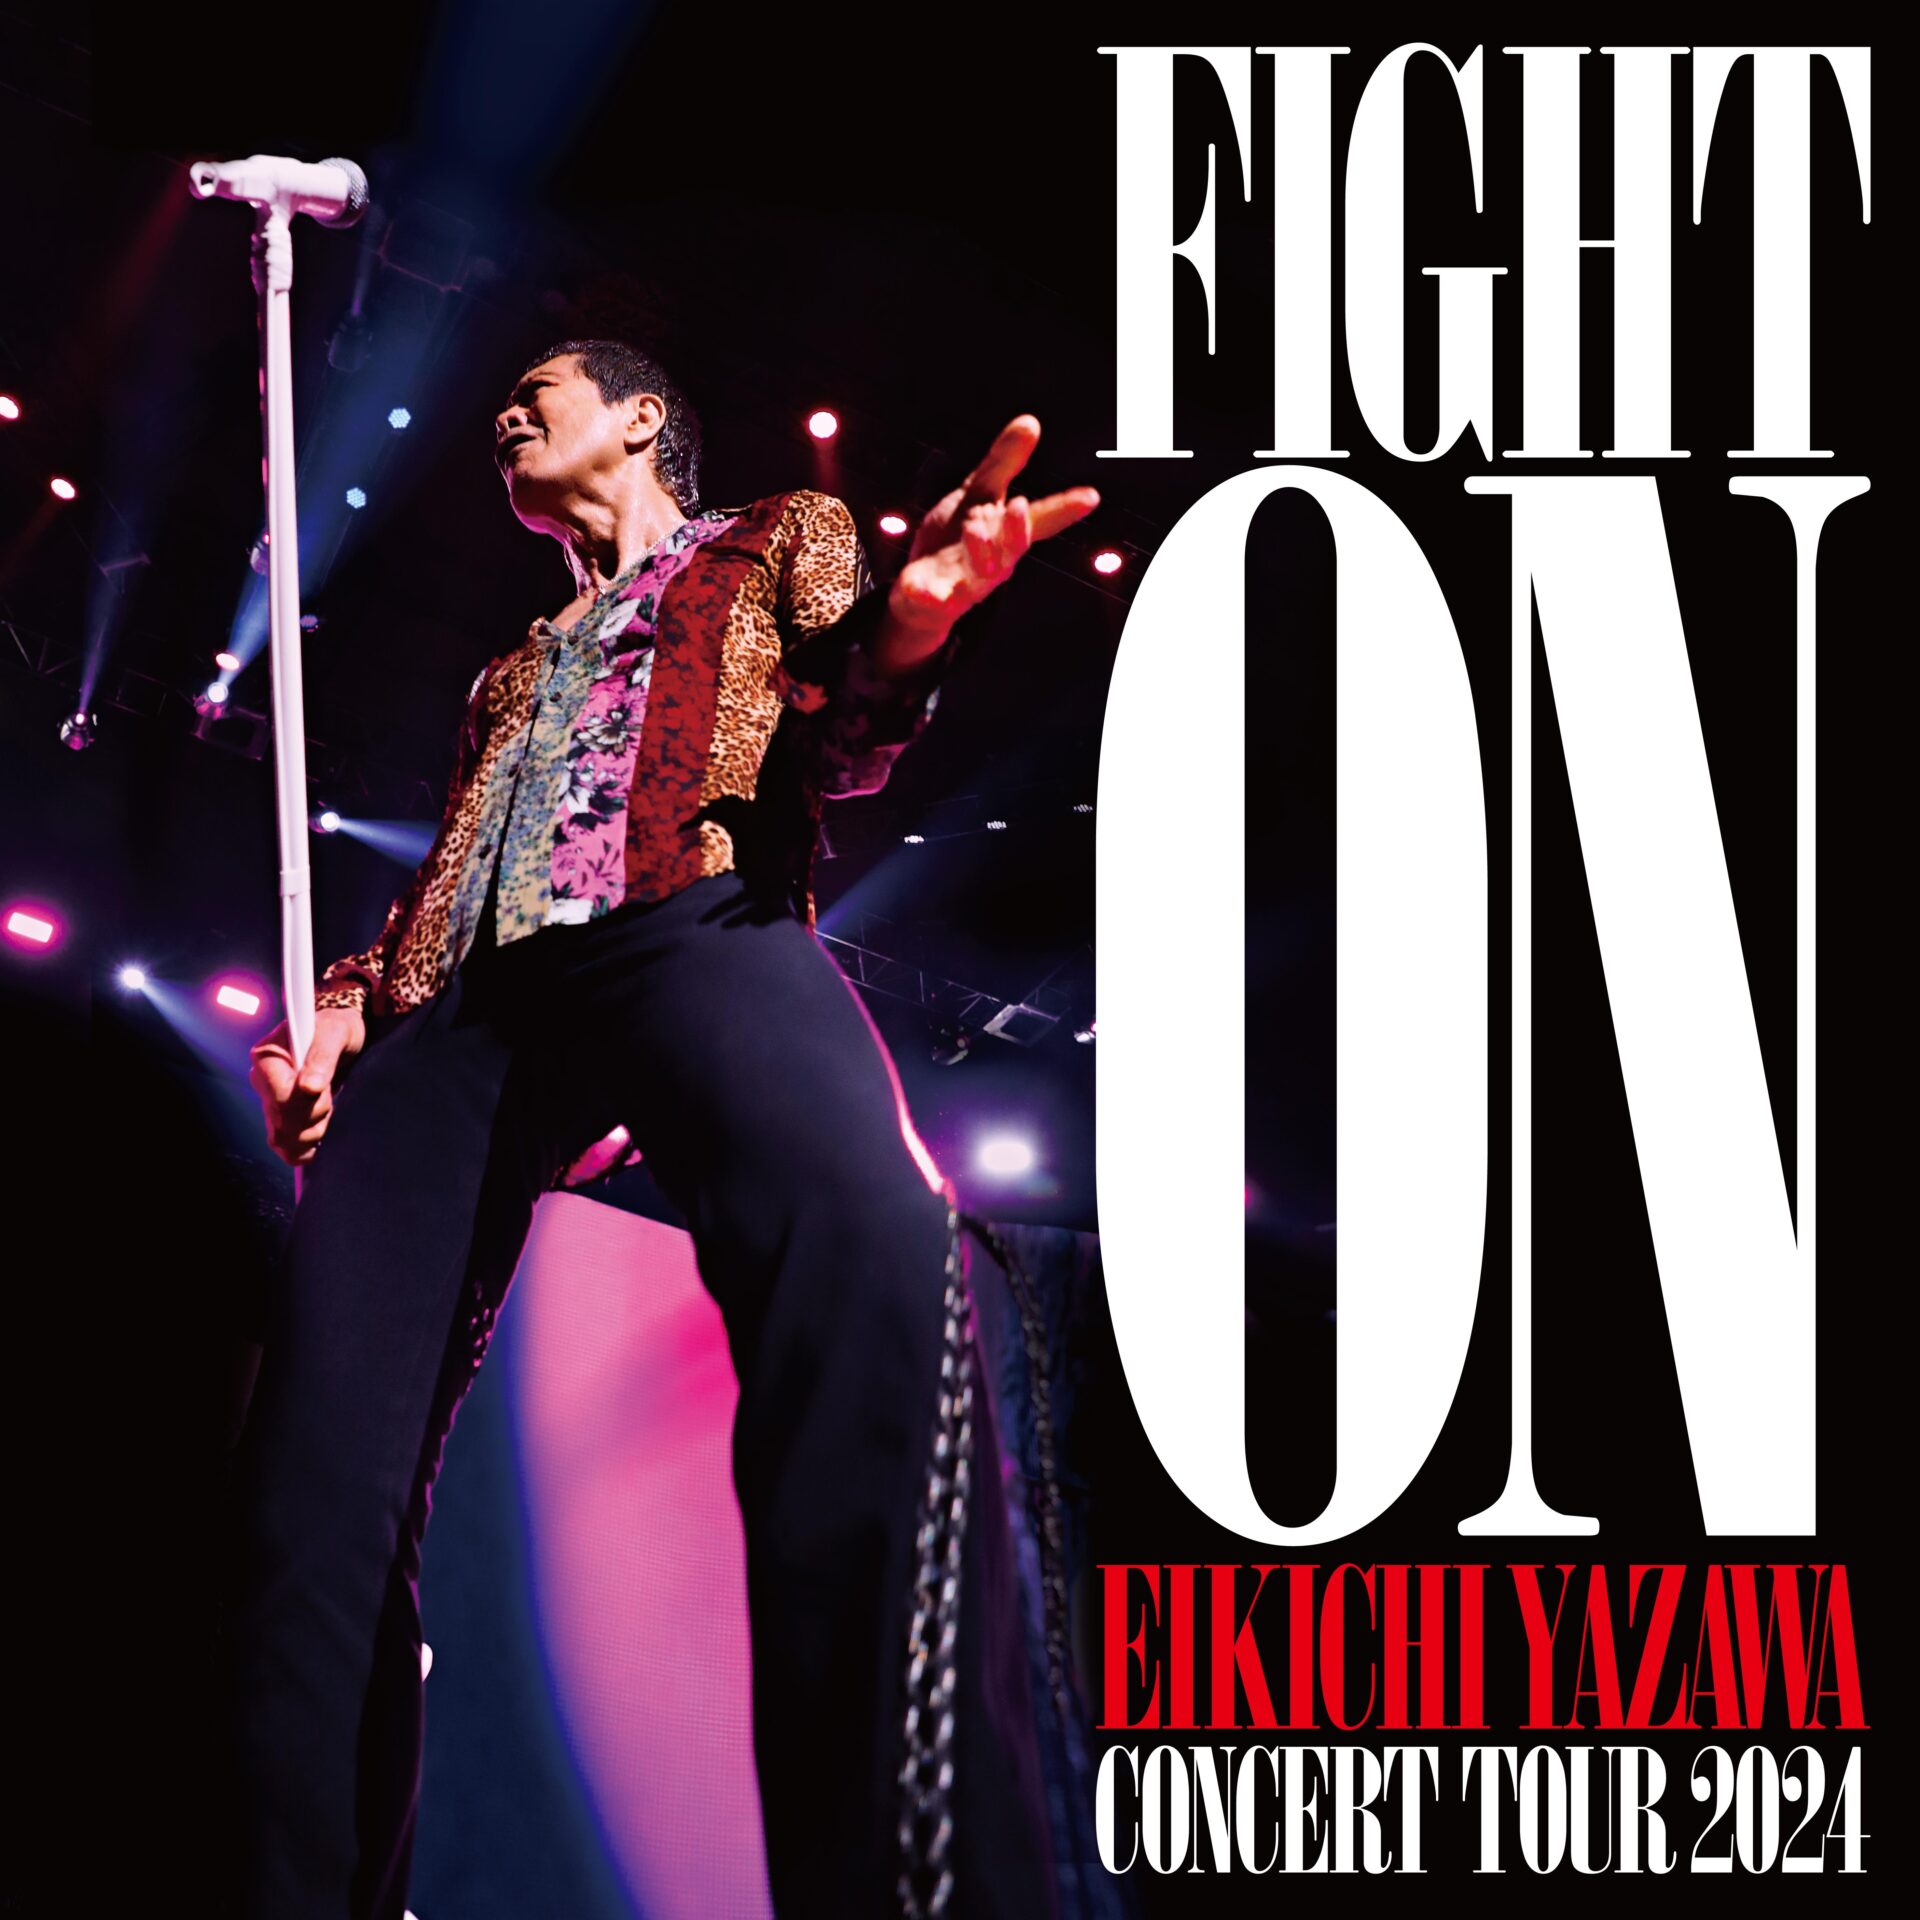 矢沢永吉｢FIGHT ON｣ EIKICHI YAZAWA CONCERT TOUR 2024